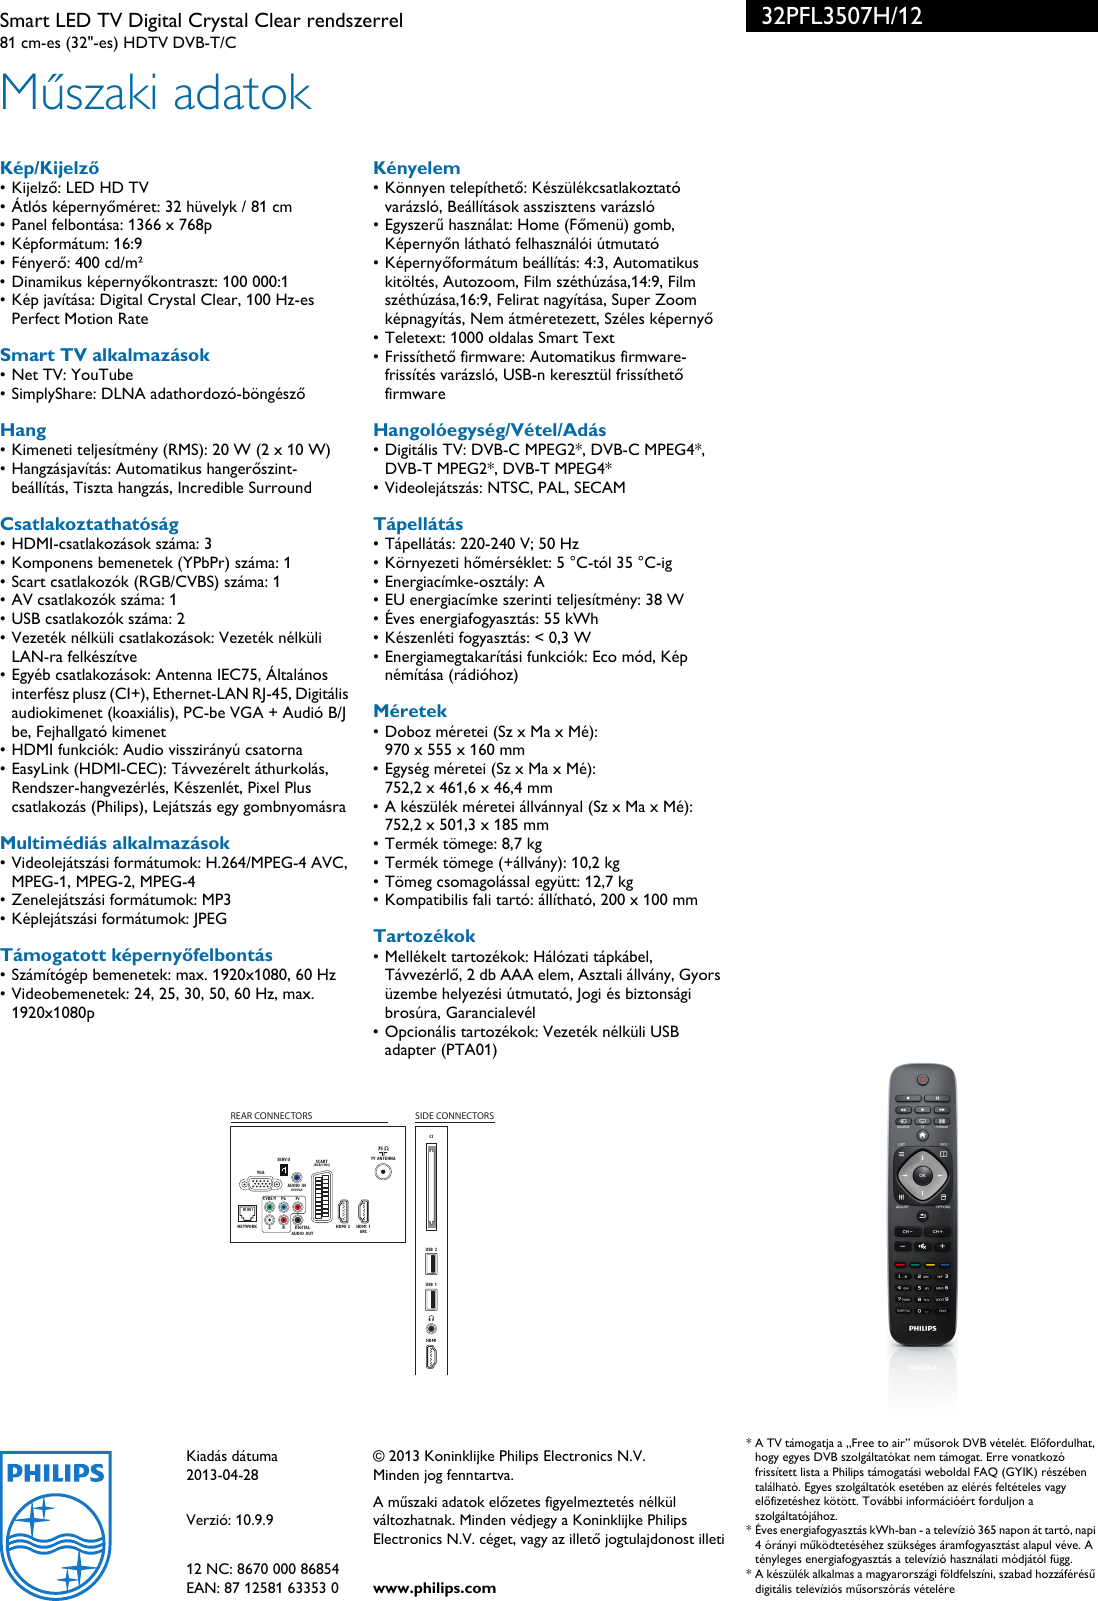 Page 3 of 3 - Philips 32PFL3507H/12 Smart LED TV Digital Crystal Clear Rendszerrel User Manual Kiadvány 32pfl3507h 12 Pss Hunhu